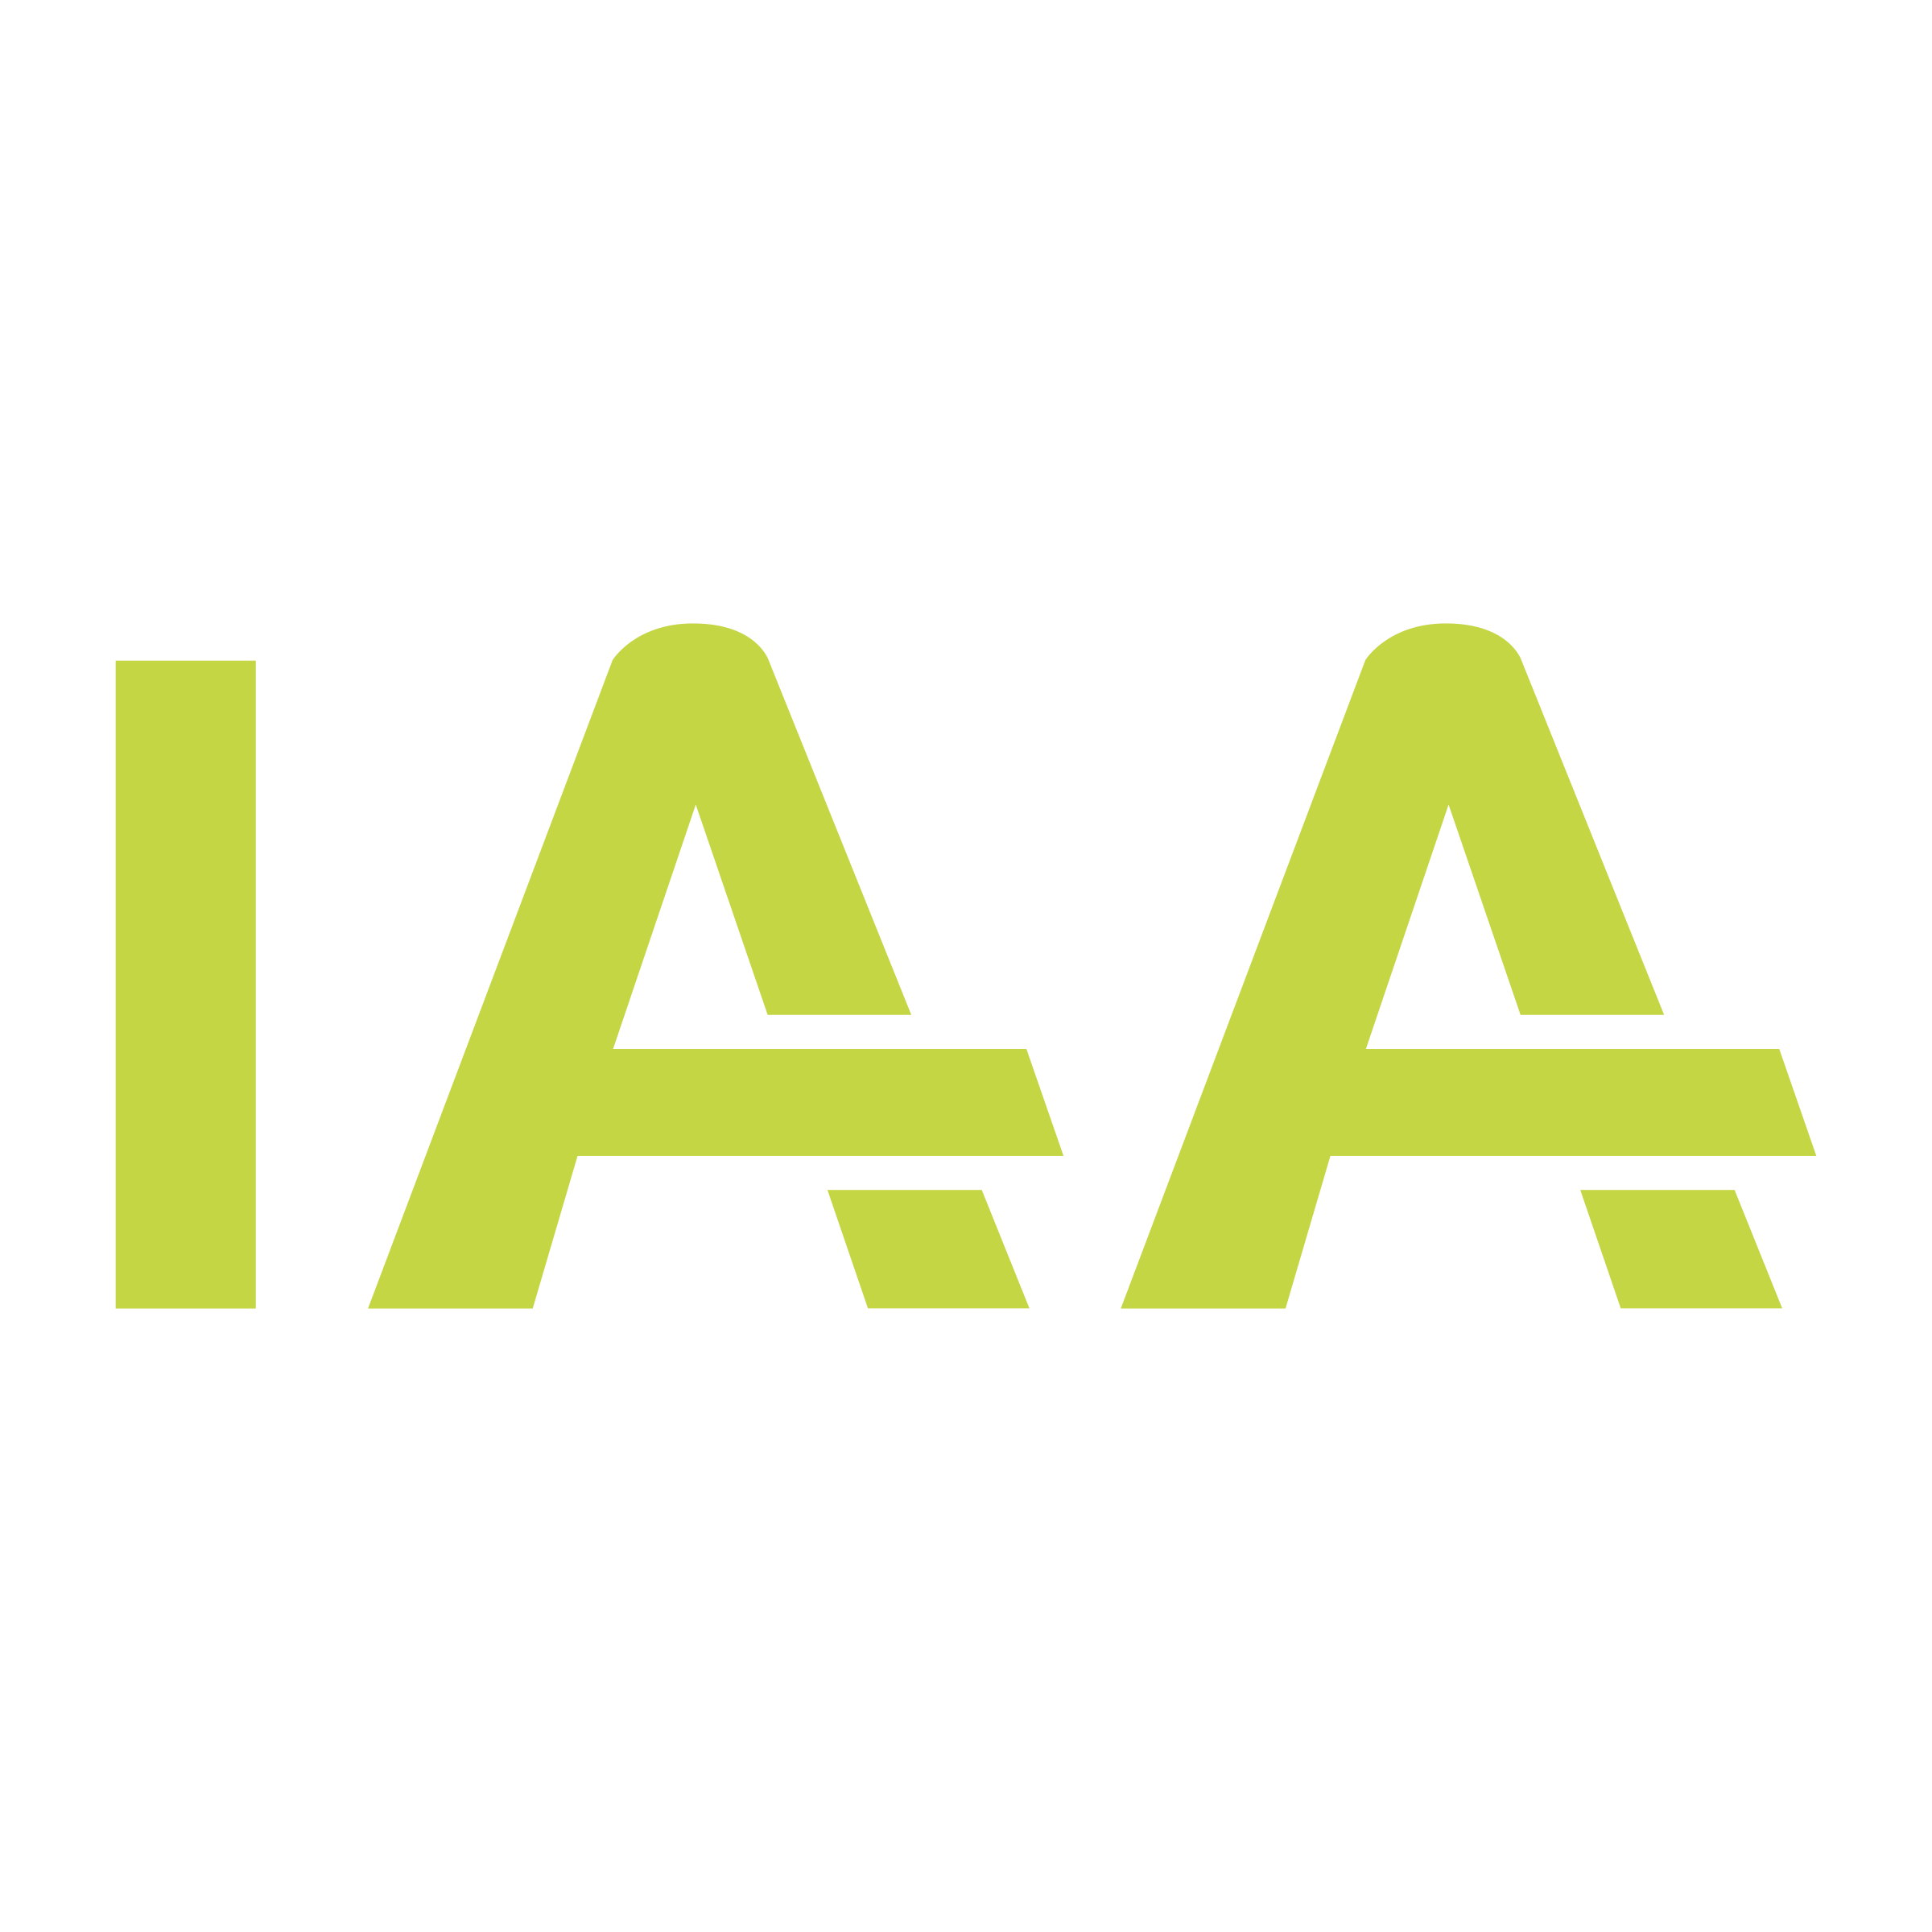 IAA Logo - IAA Logo PNG Transparent & SVG Vector - Freebie Supply